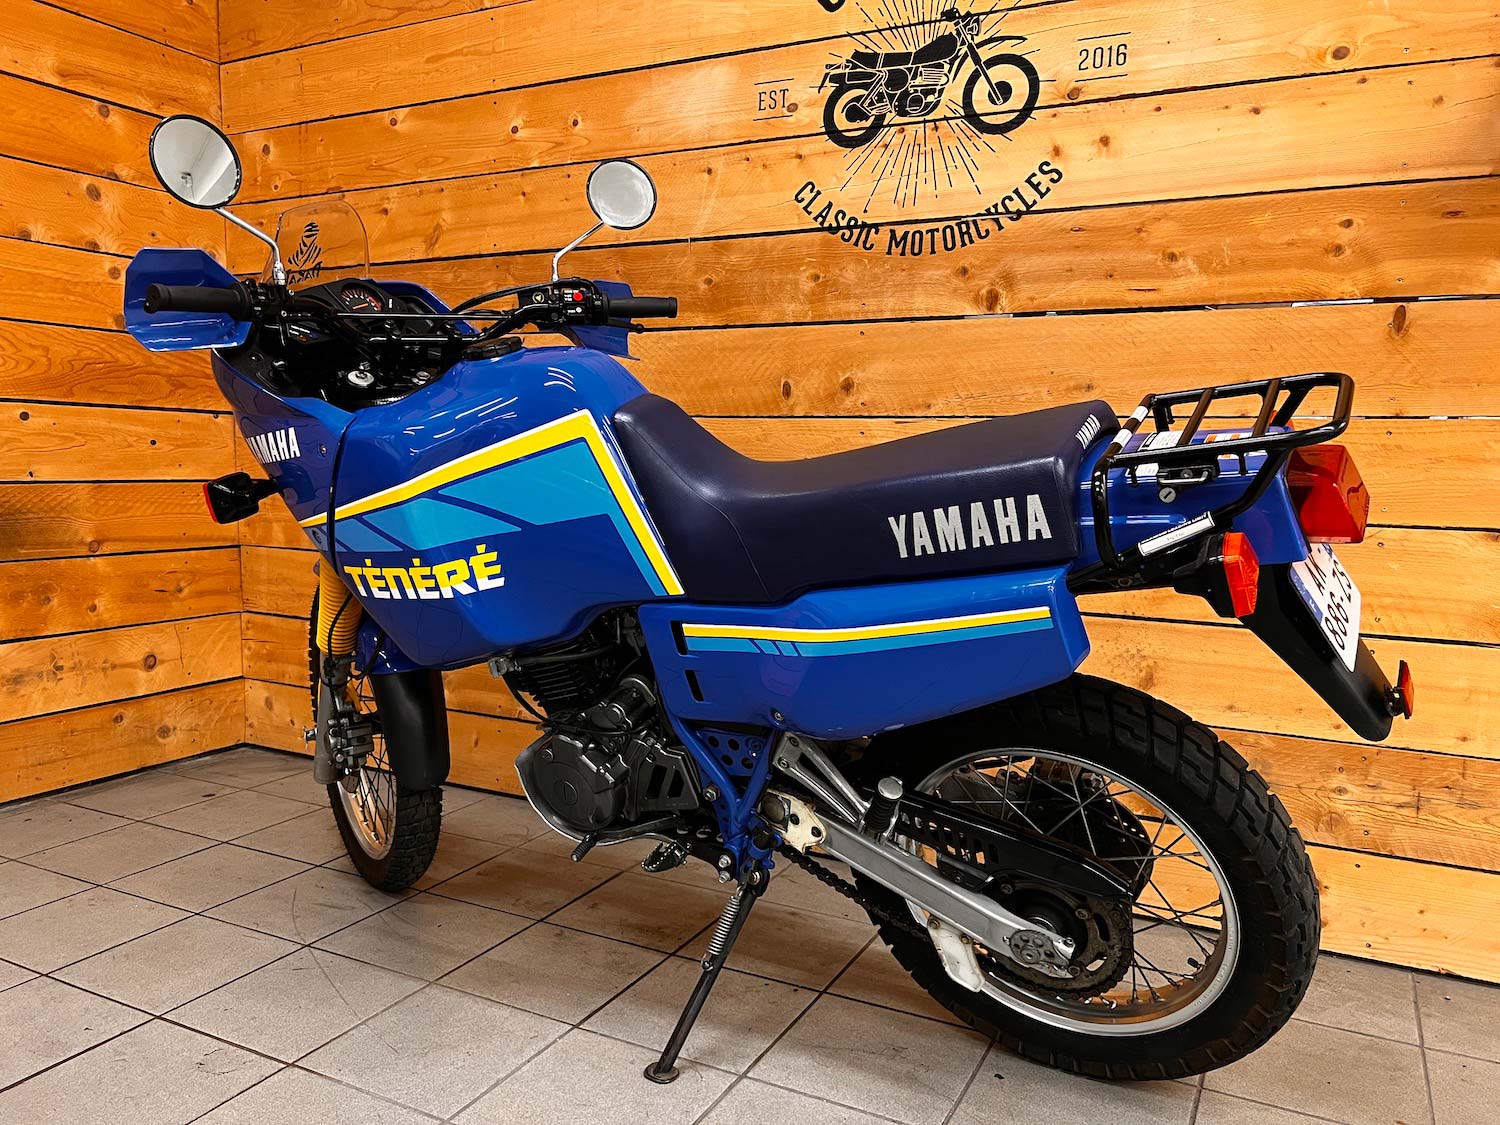 Yamaha_xt600z_Cezanne_classic_motorcycle_7-158.jpg